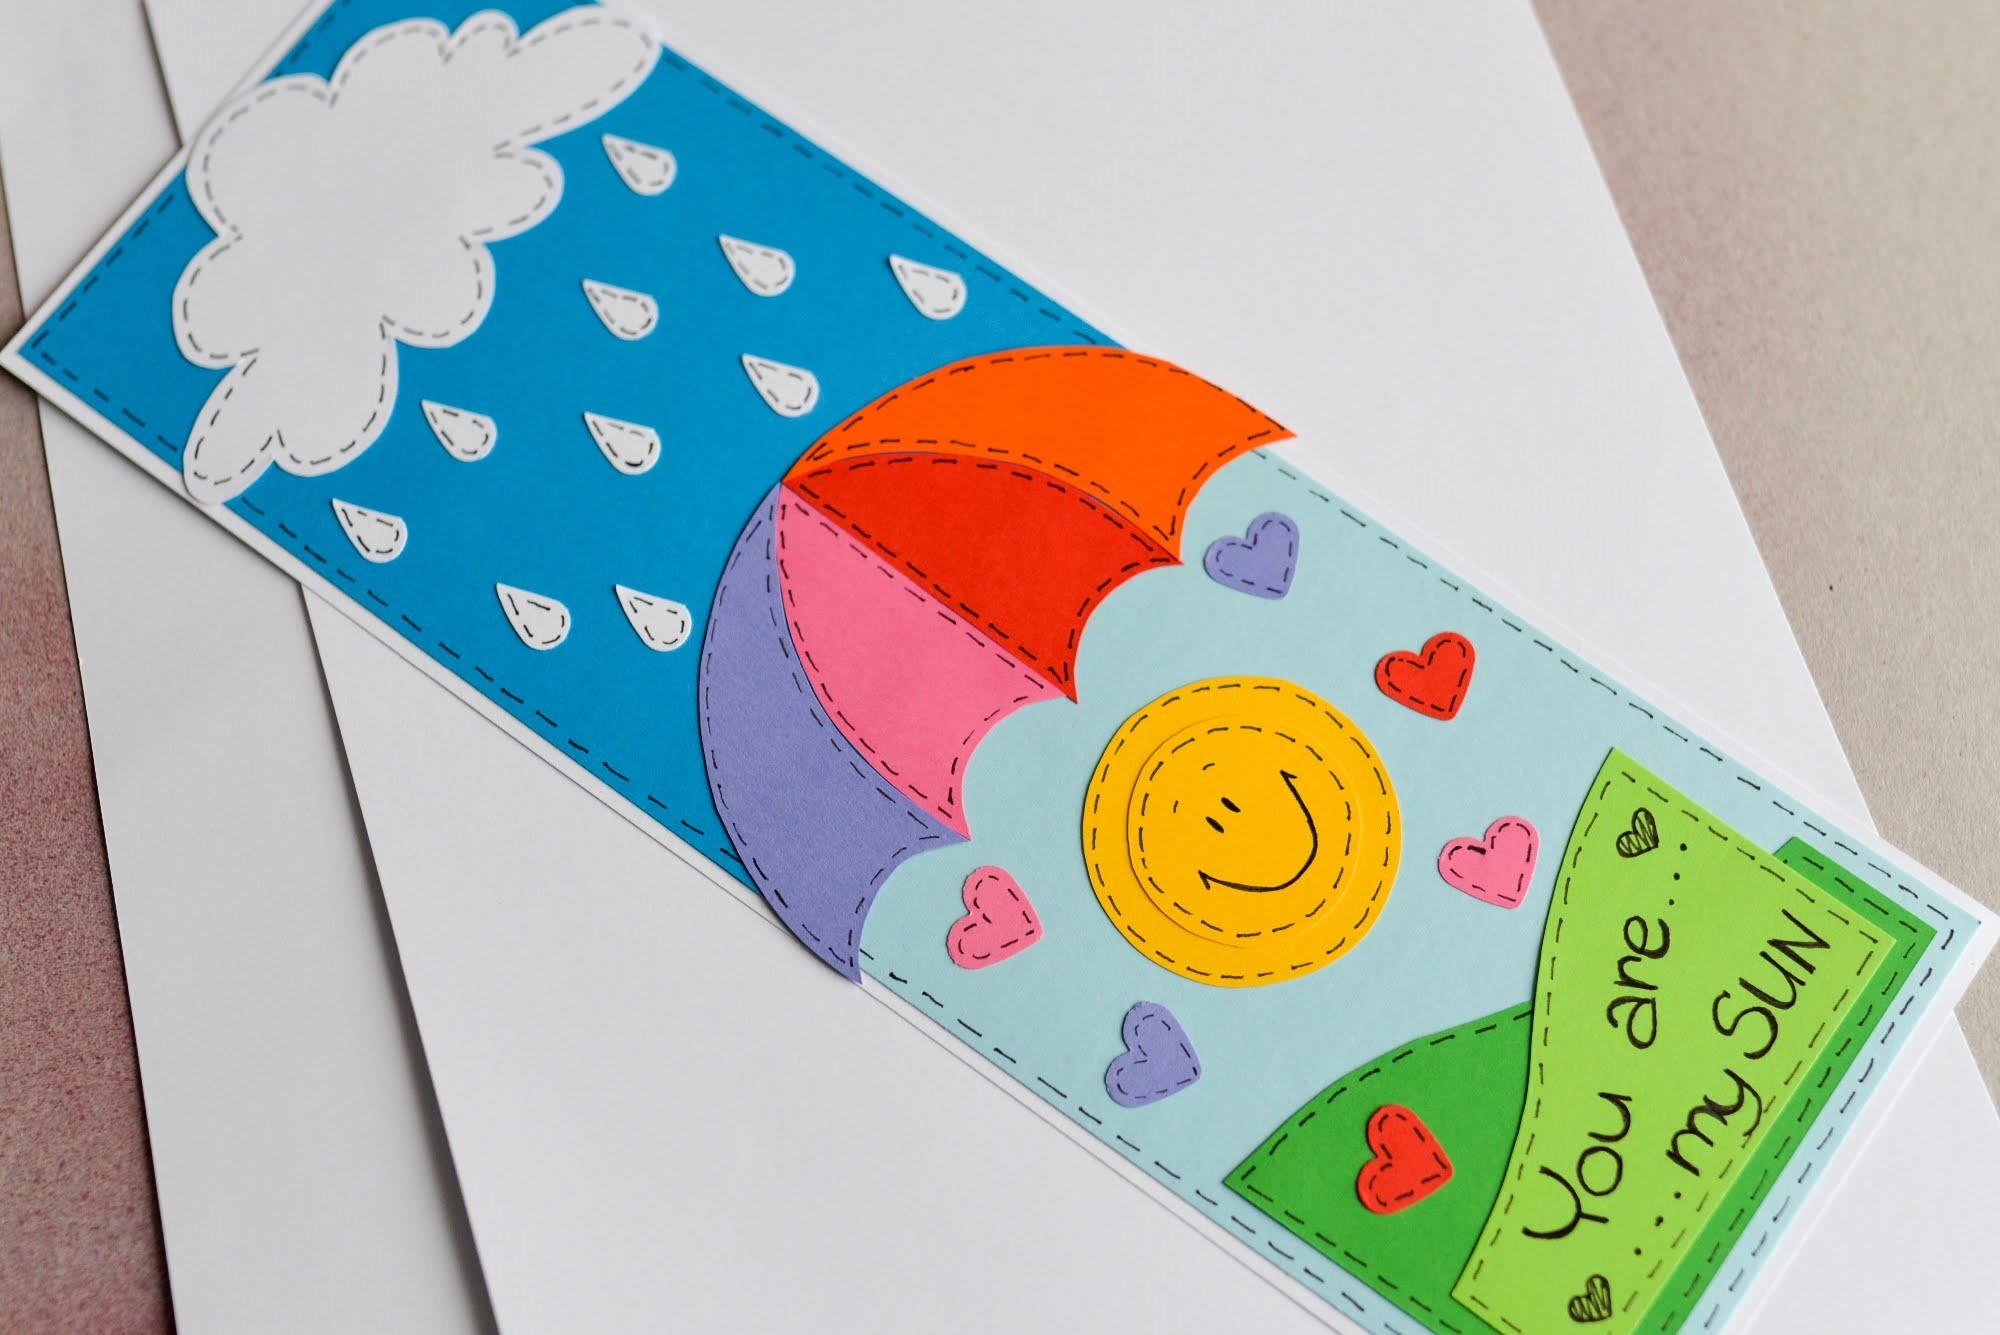 How to Make - Cute Greeting Card Valentine's Day - Step by Step | Kartka Na Walentynki